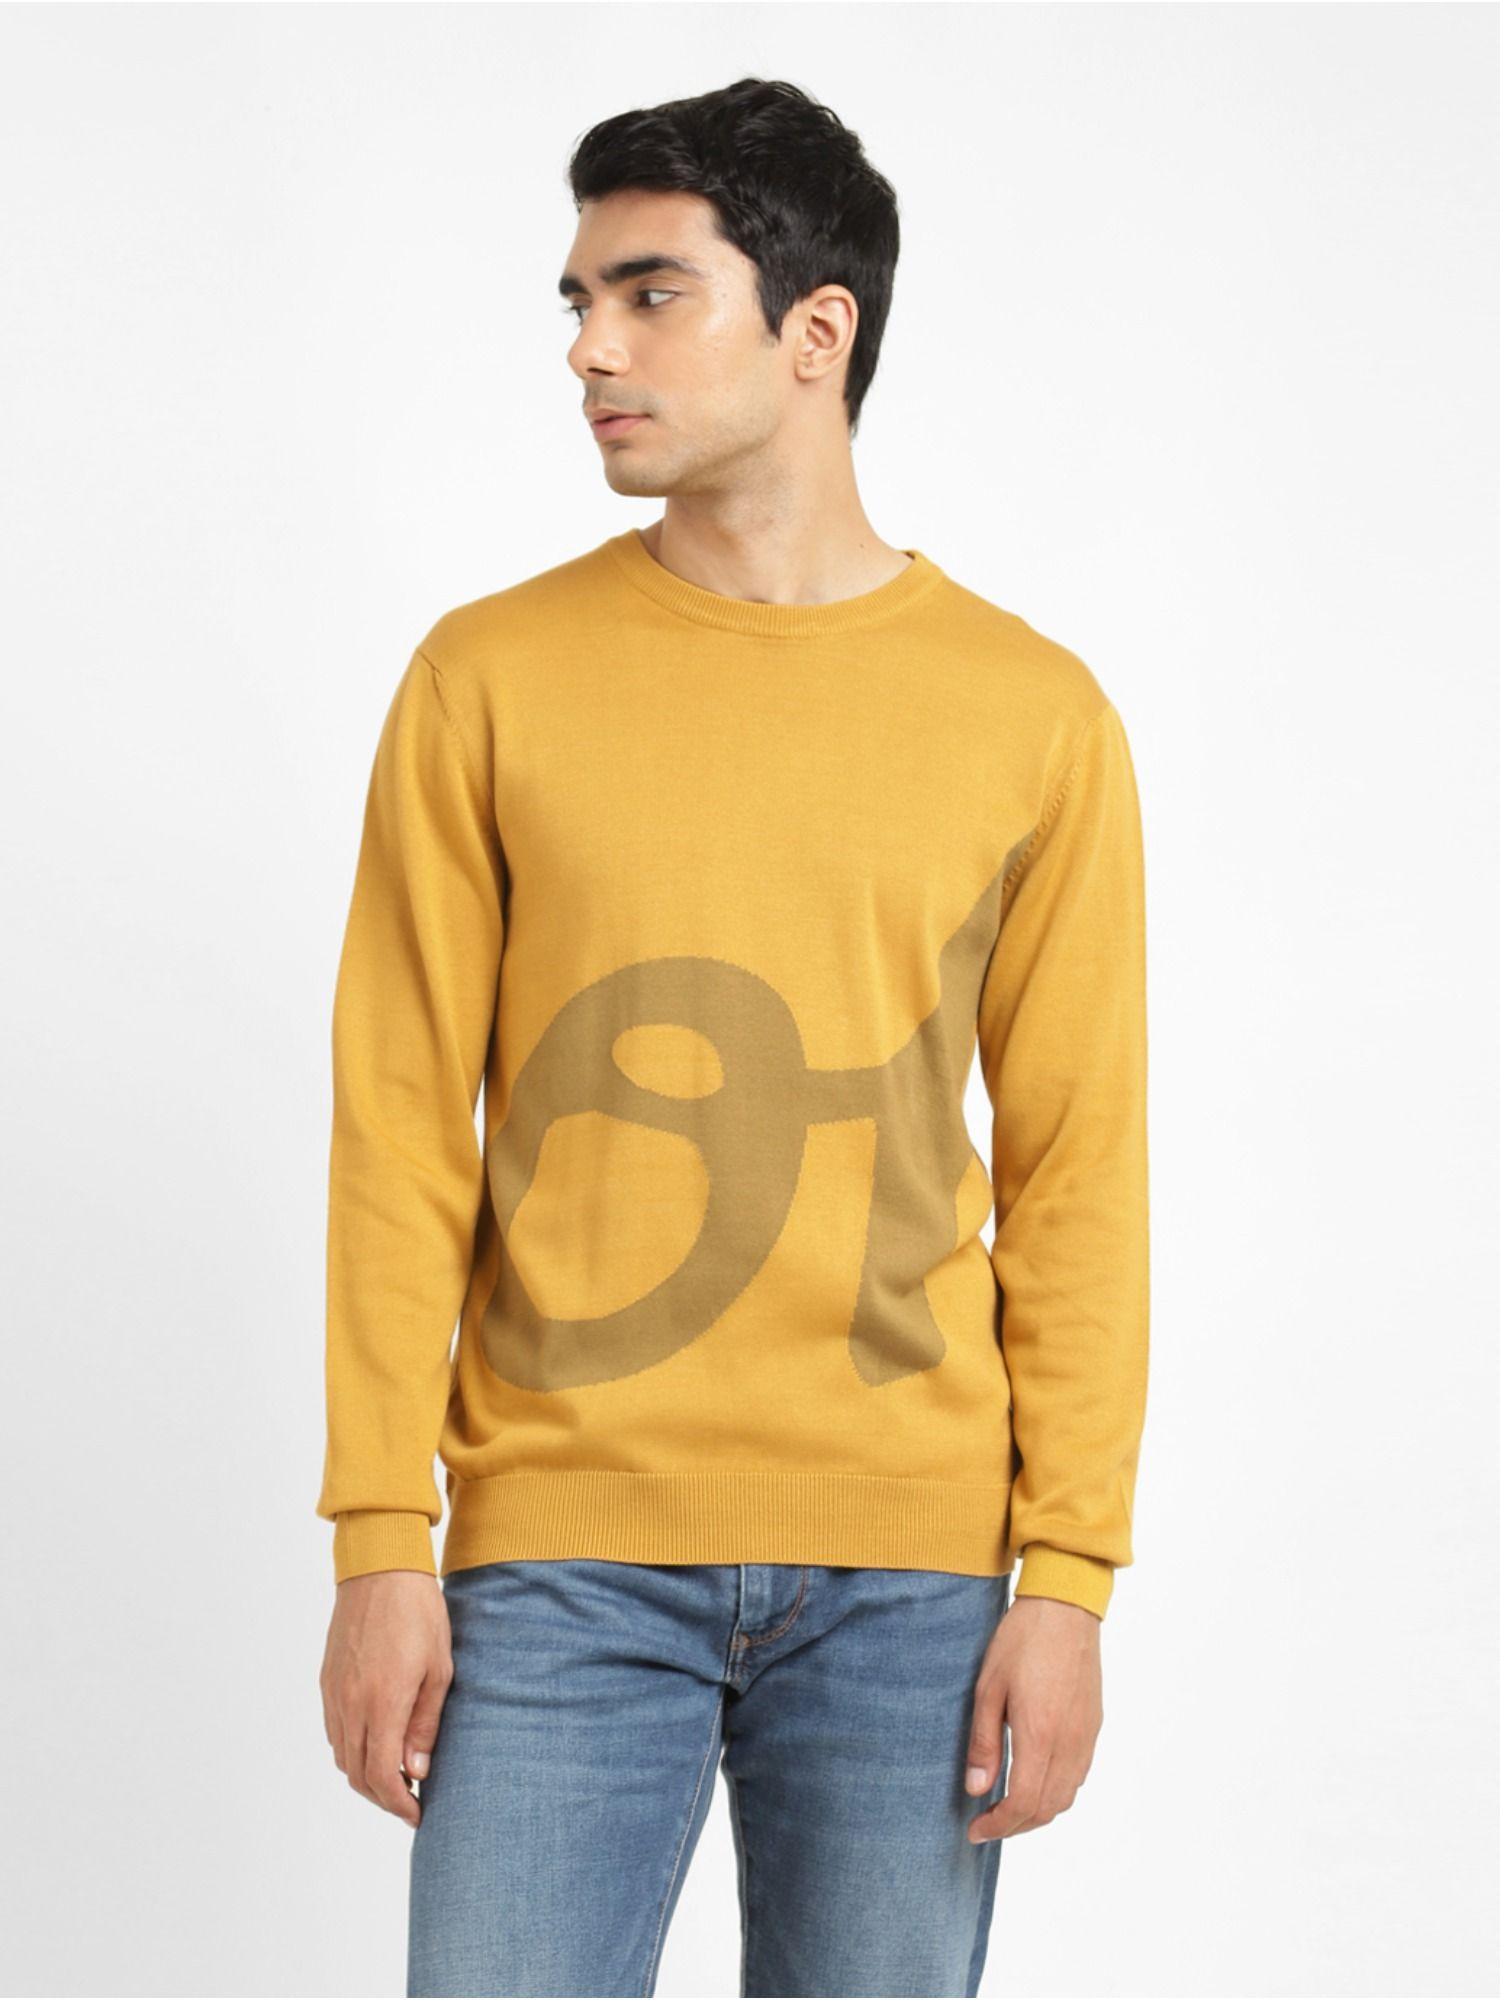 men's-printed-mustard-crew-neck-sweater